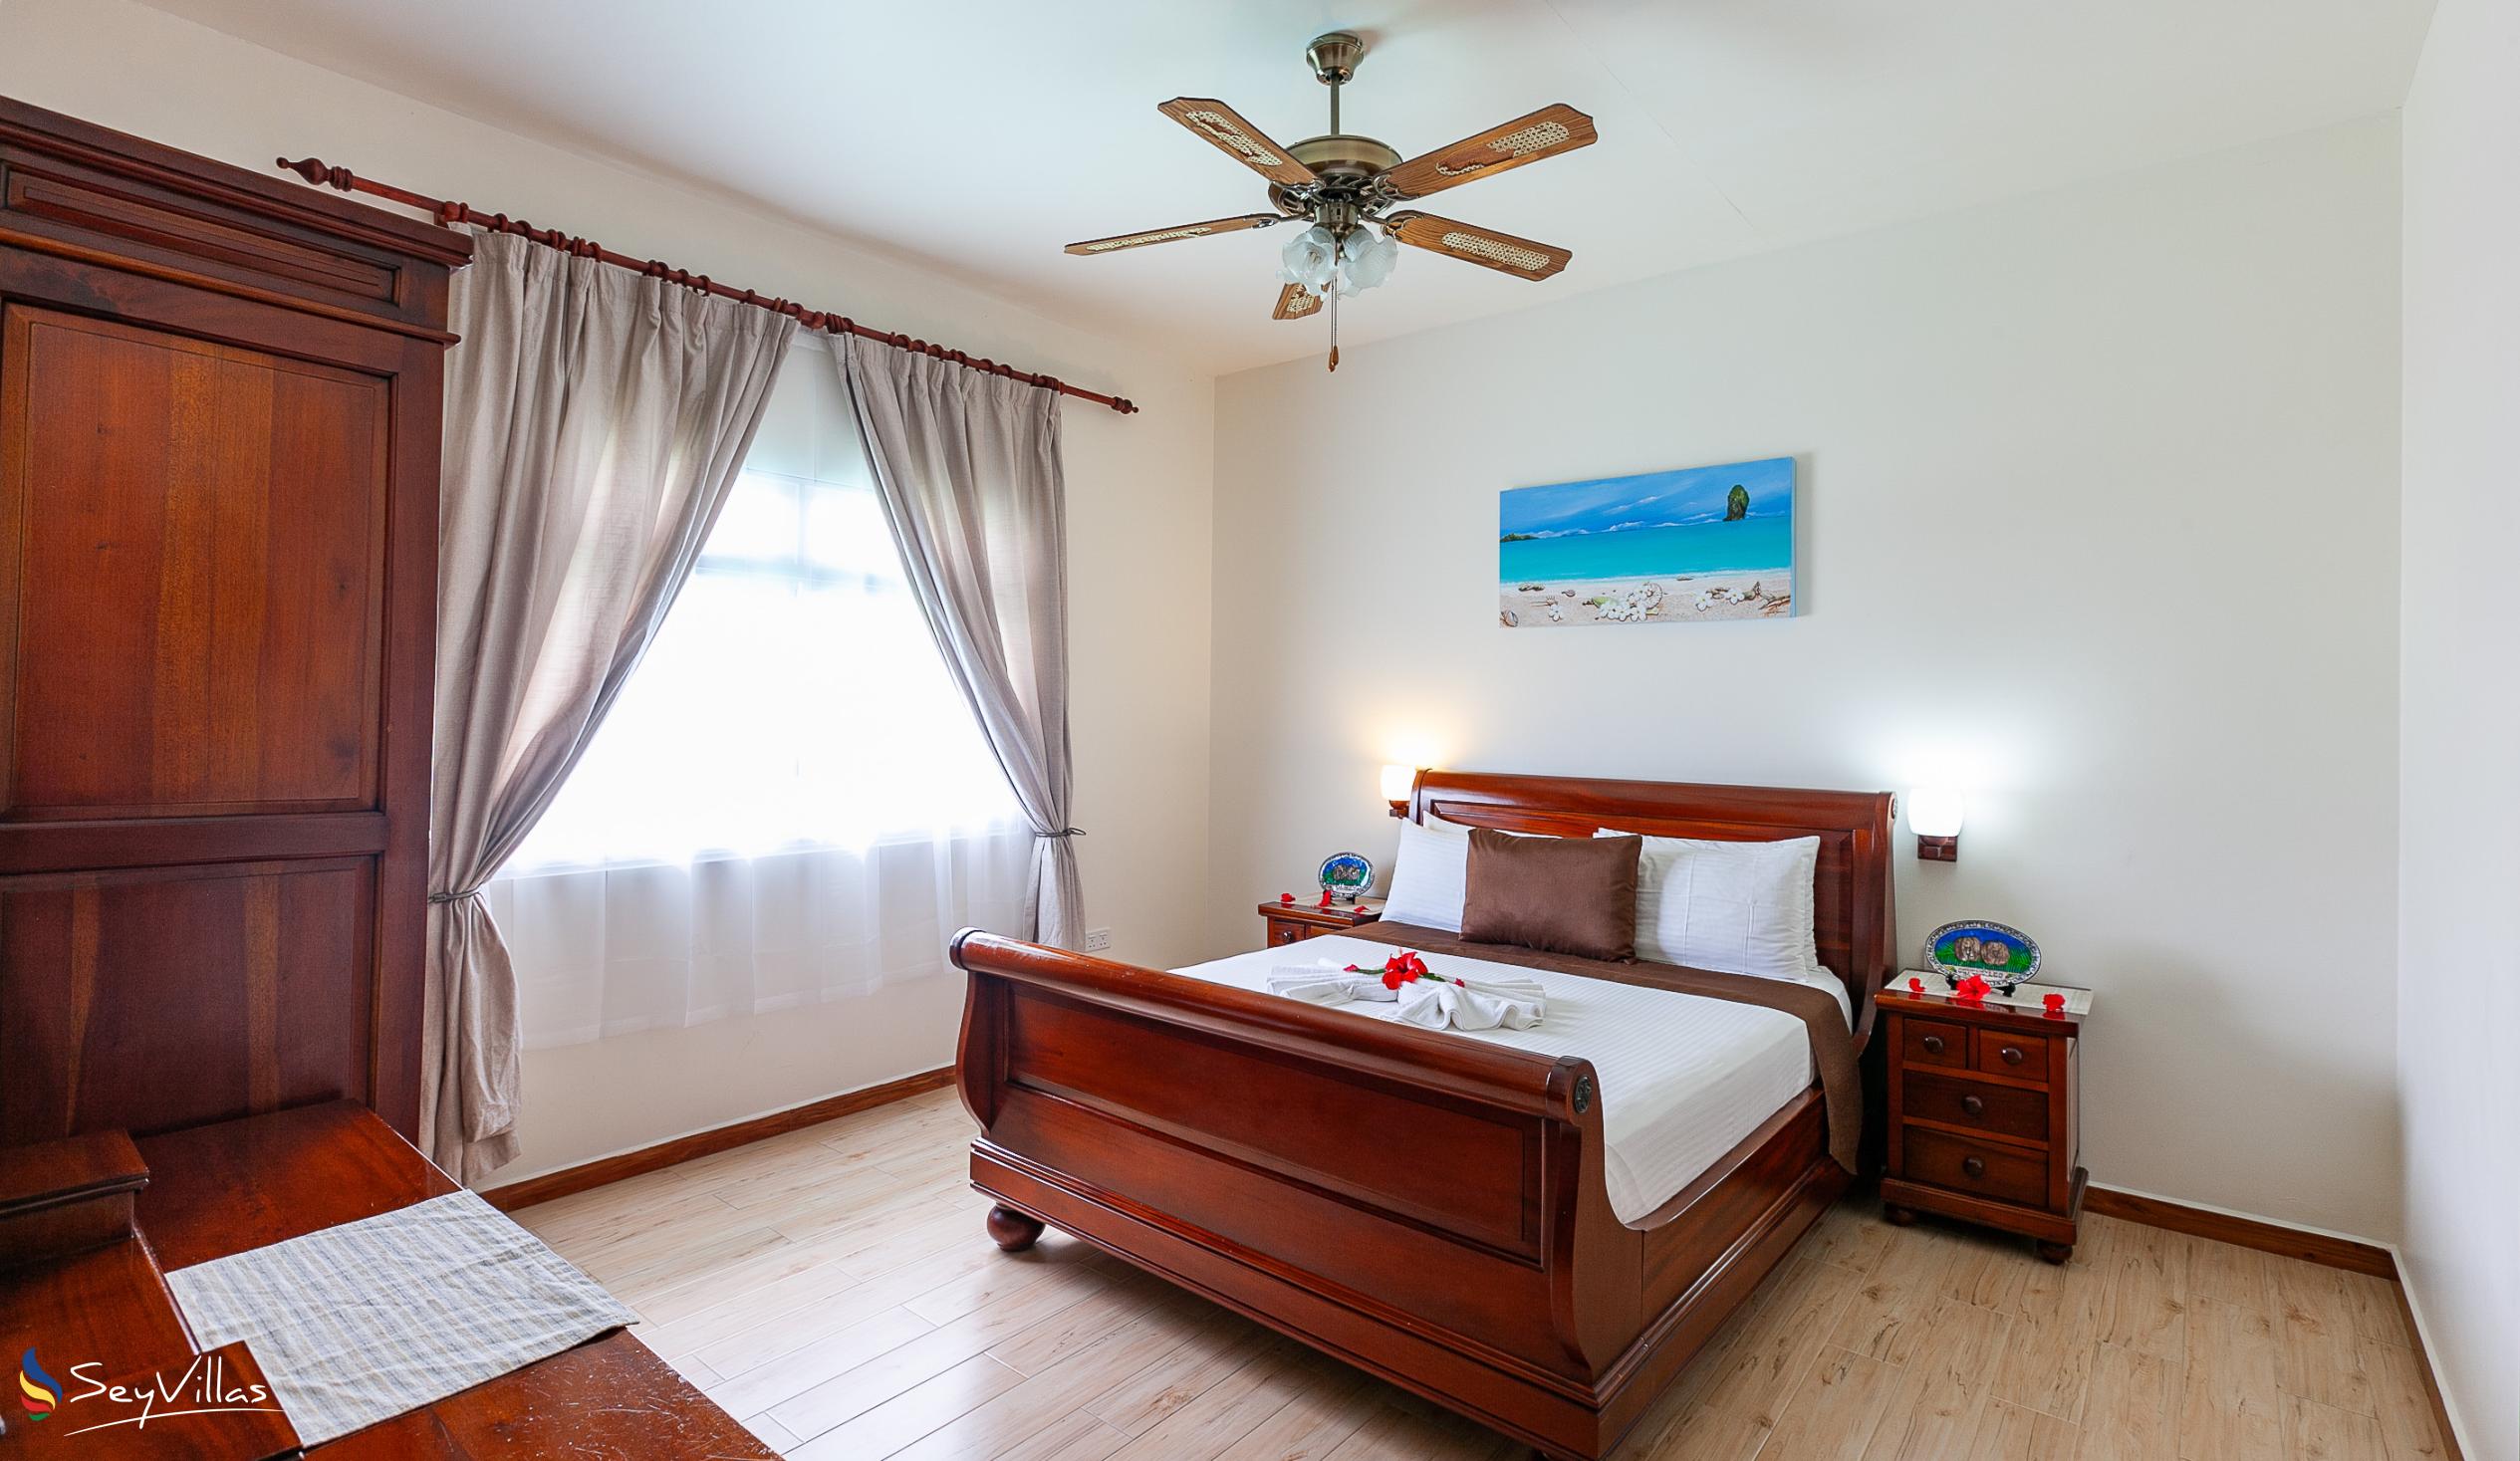 Photo 55: Seashell Beach Villa - 2-Bedroom Apartment - Praslin (Seychelles)